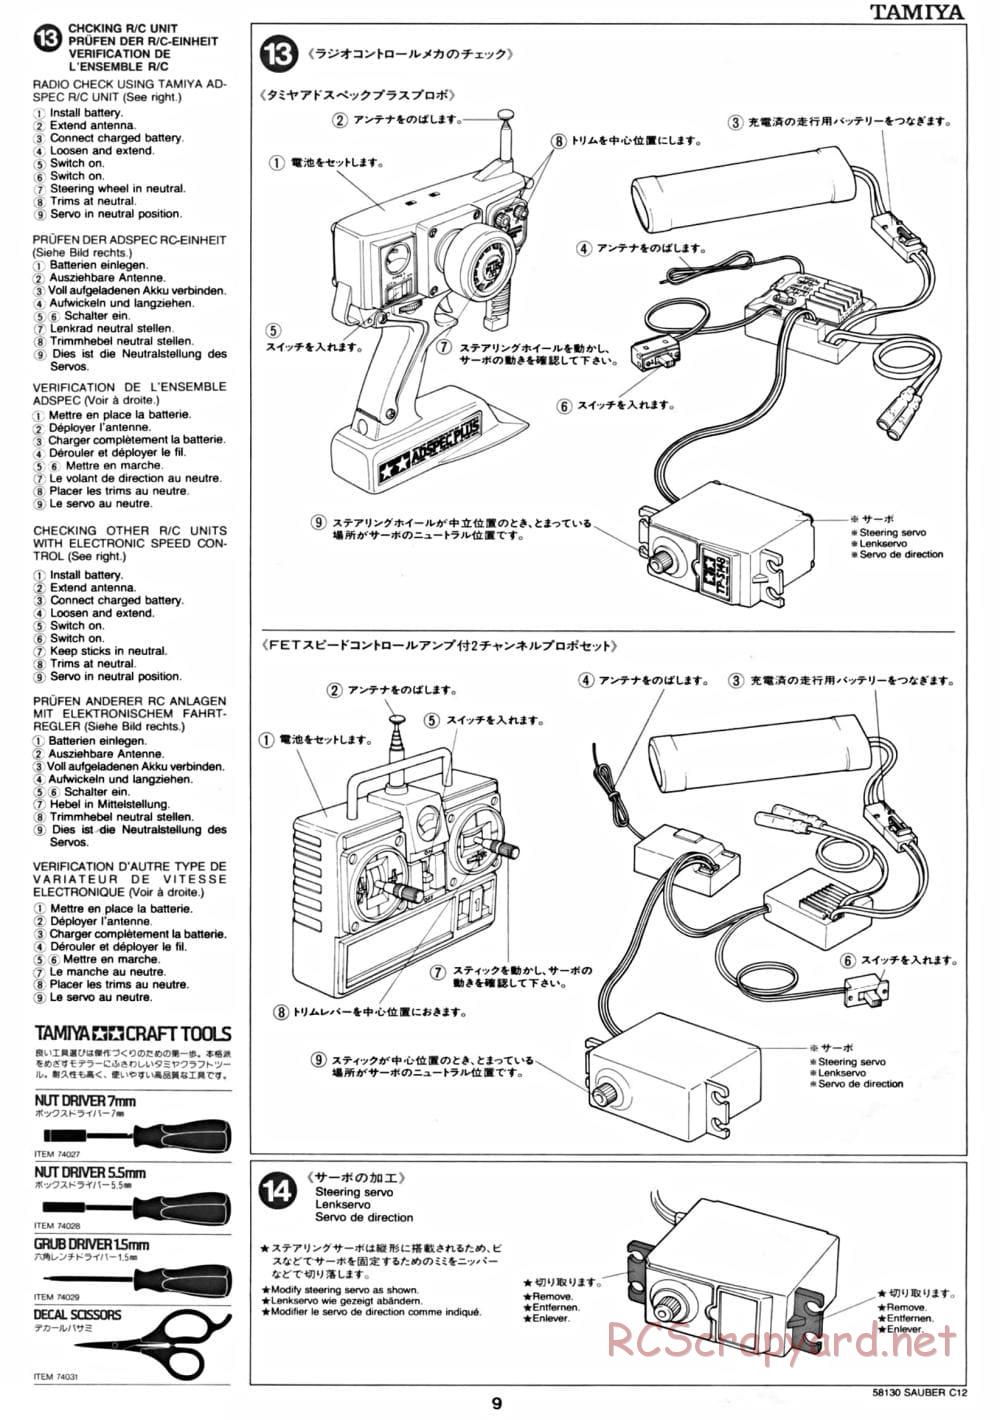 Tamiya - Sauber C12 - F103 Chassis - Manual - Page 9